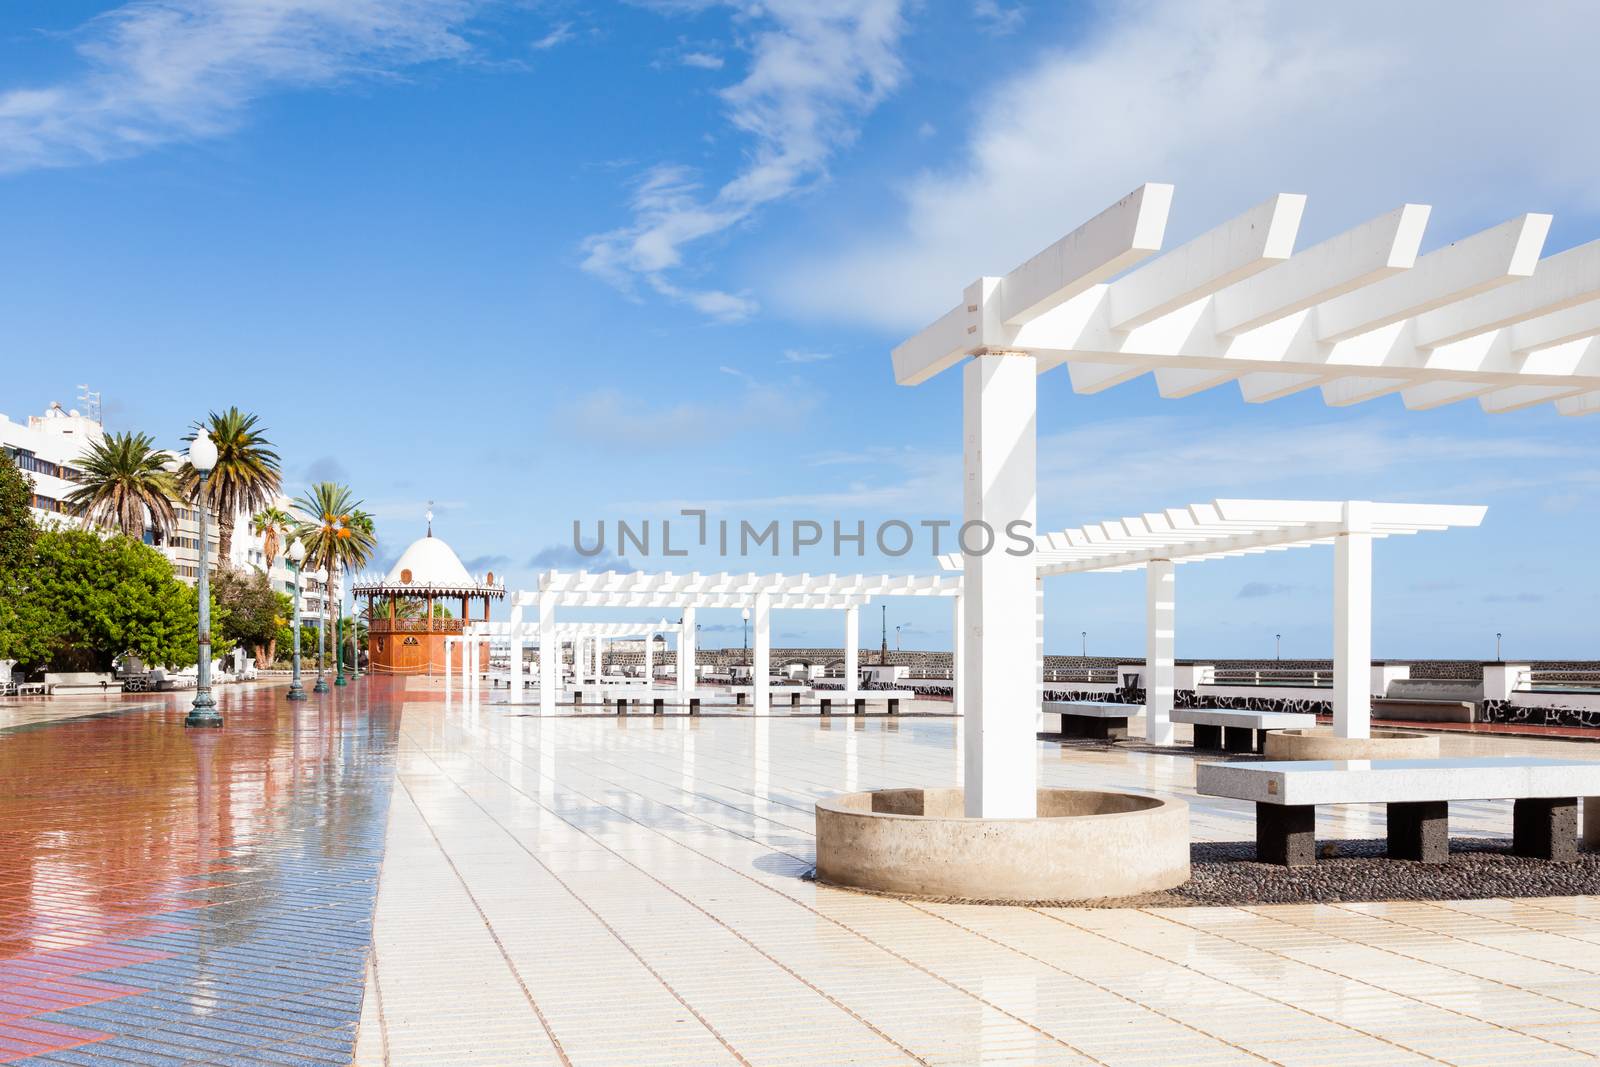 The Arrecife waterfront on Avenida La Marina, on the island of Lanzarote.